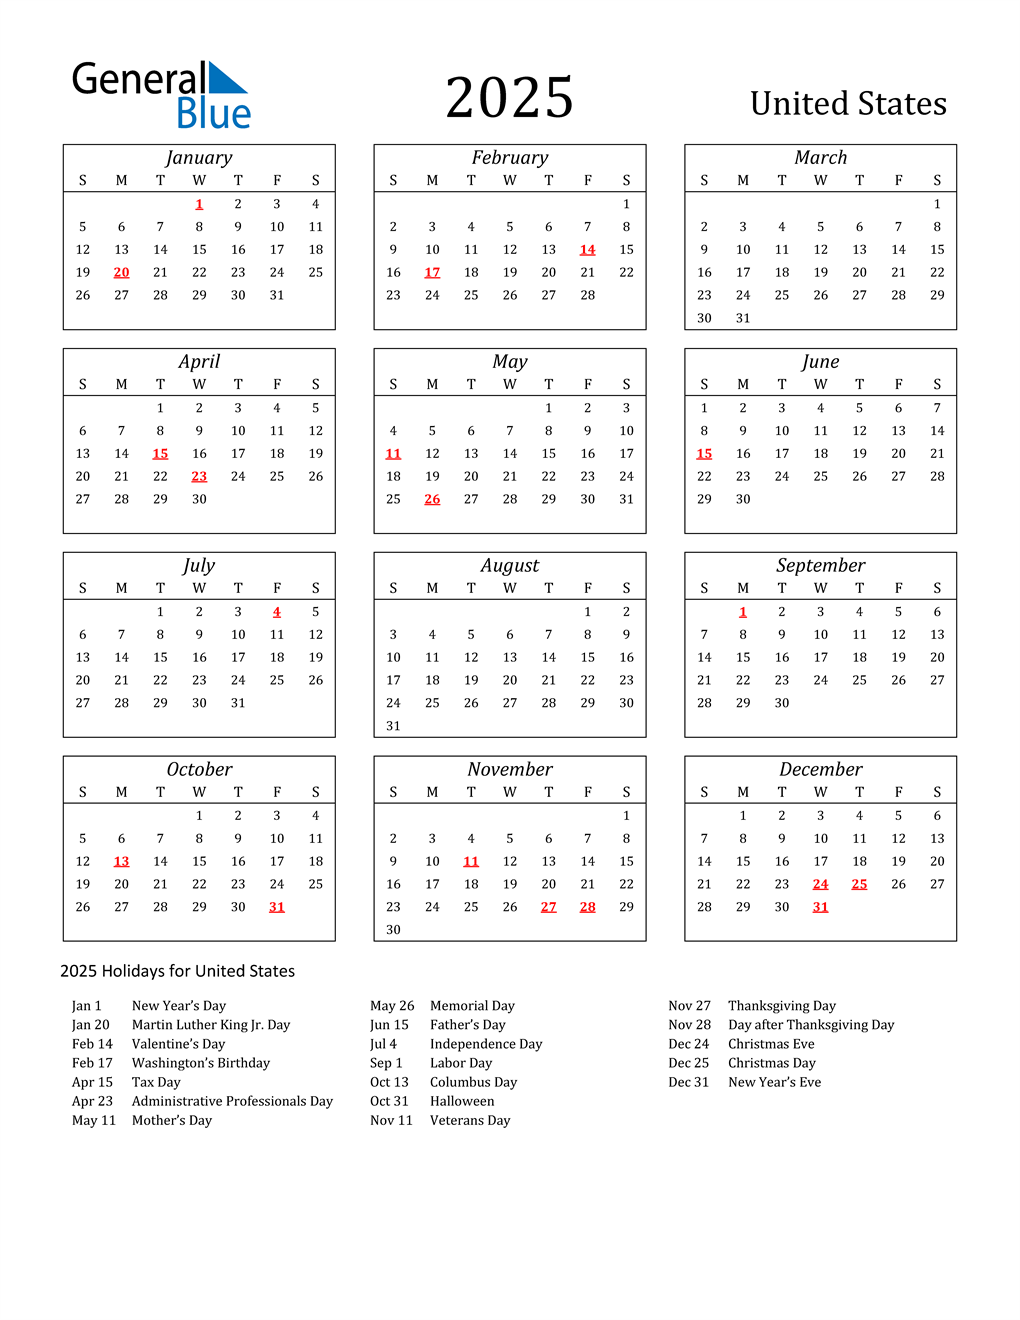 2019-calendar-with-federal-holidays